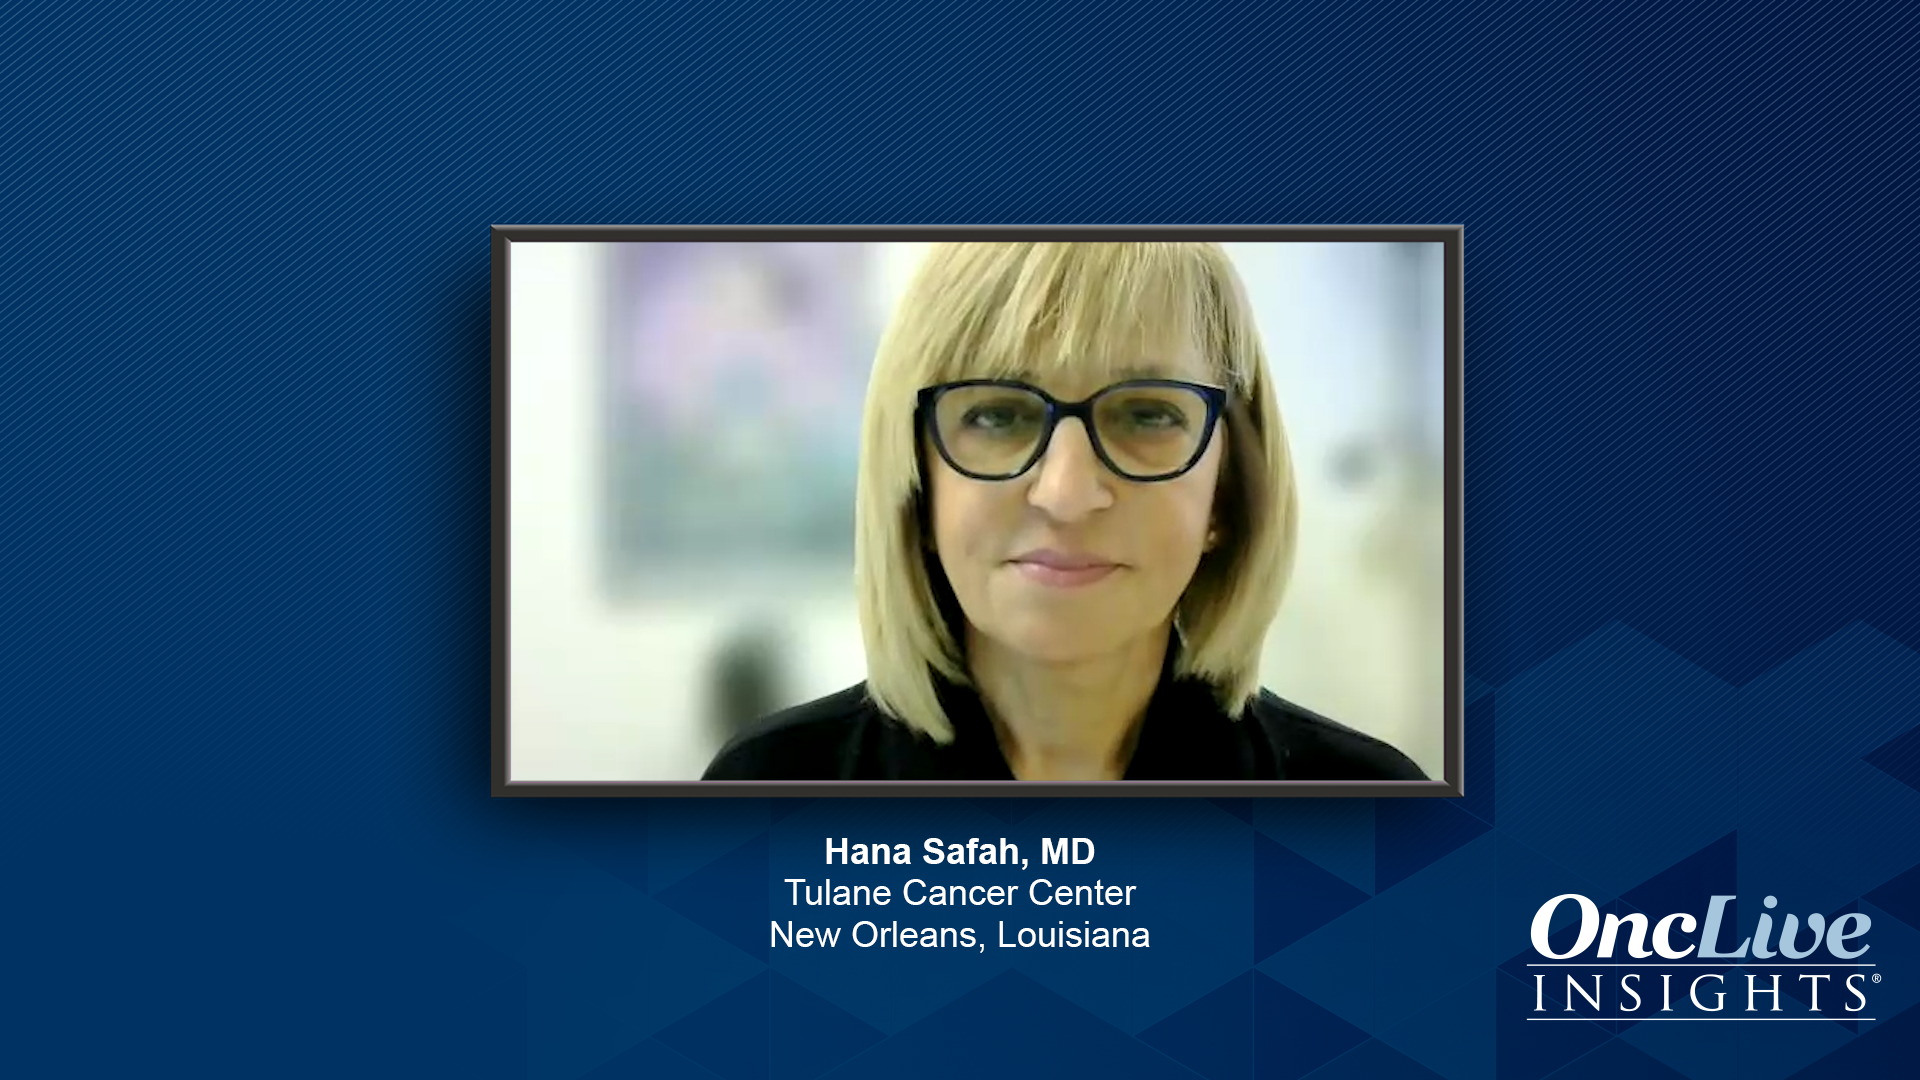 Hana Safah, MD, an expert on GvHD